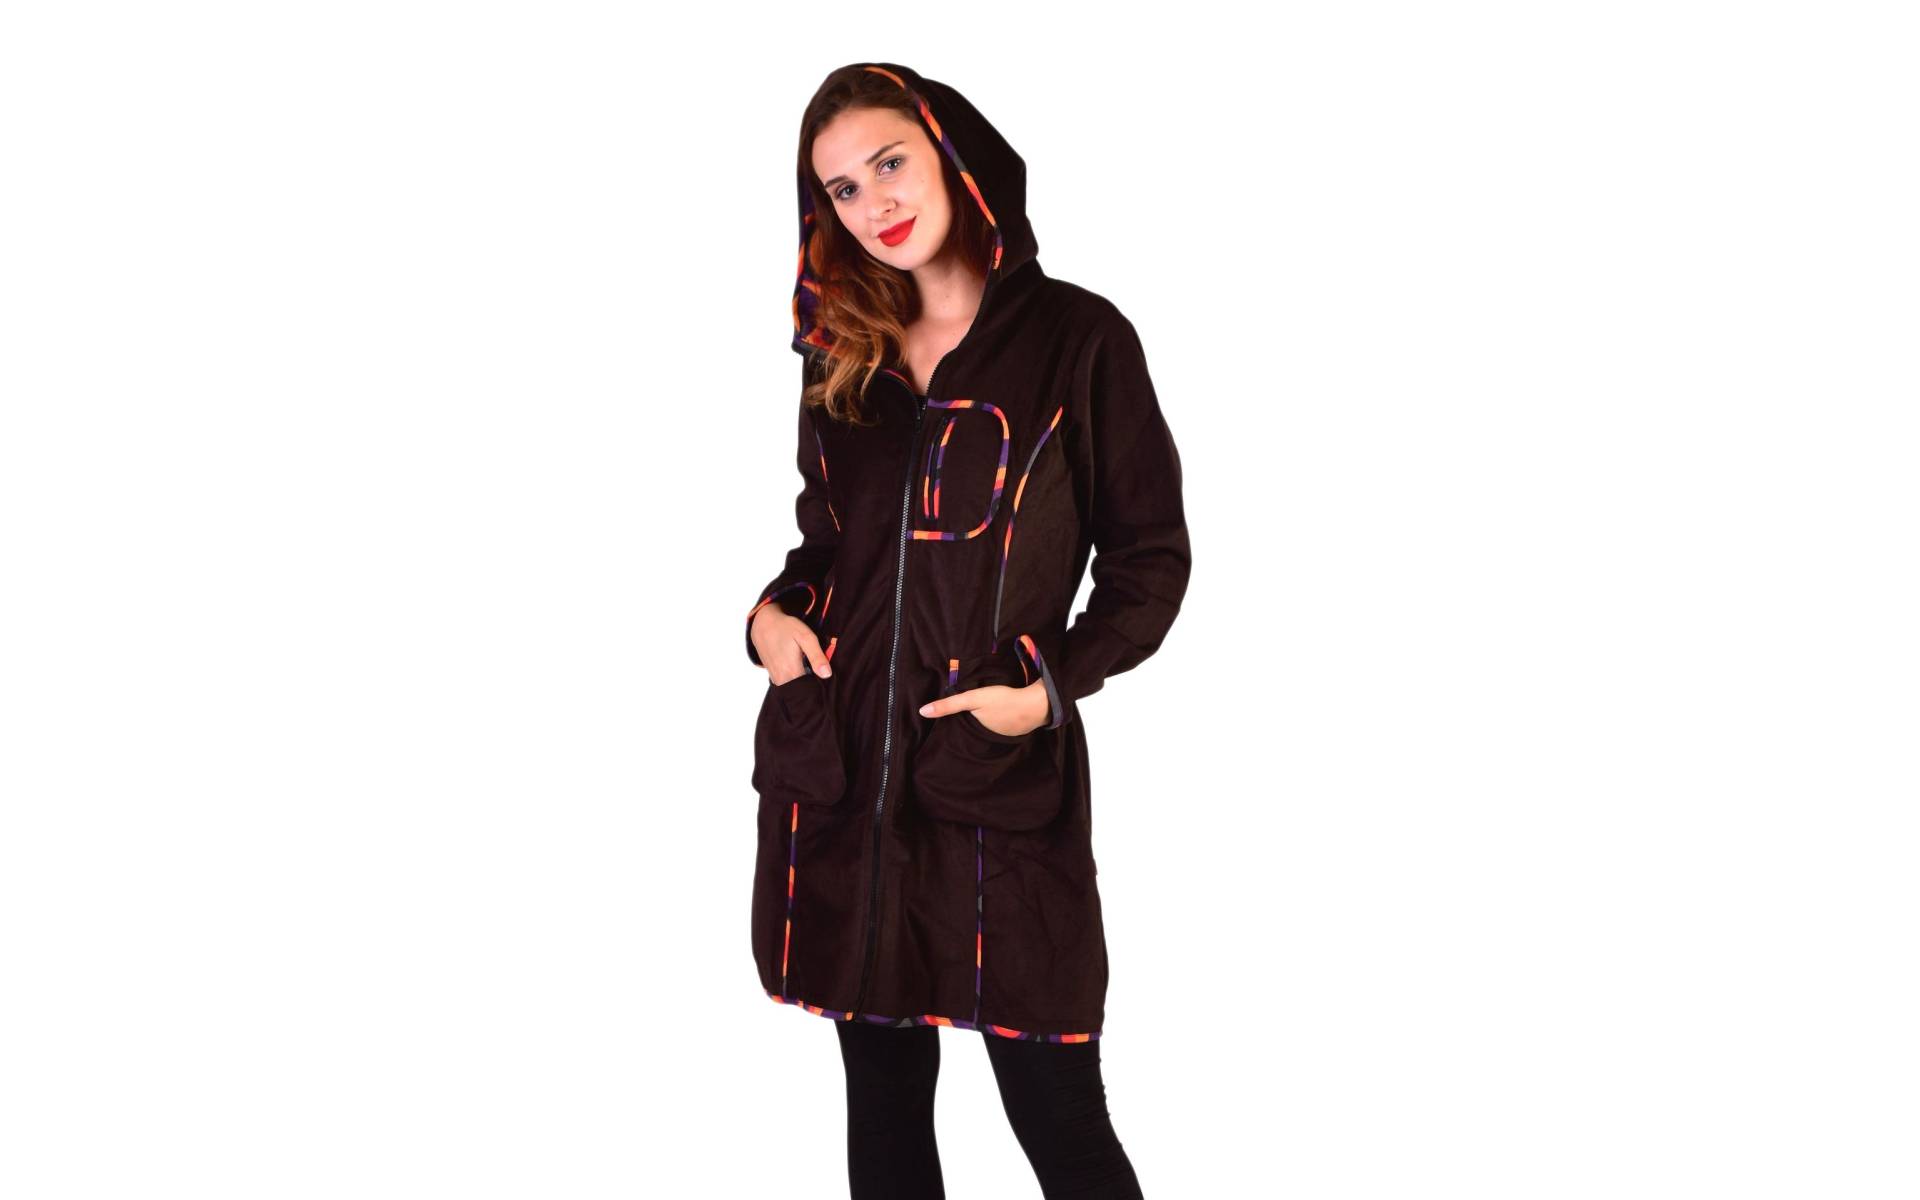 Hnedý manžestrový kabátik s kapucňou, oranžové lemovanie, tri vrecká, bez podšívky